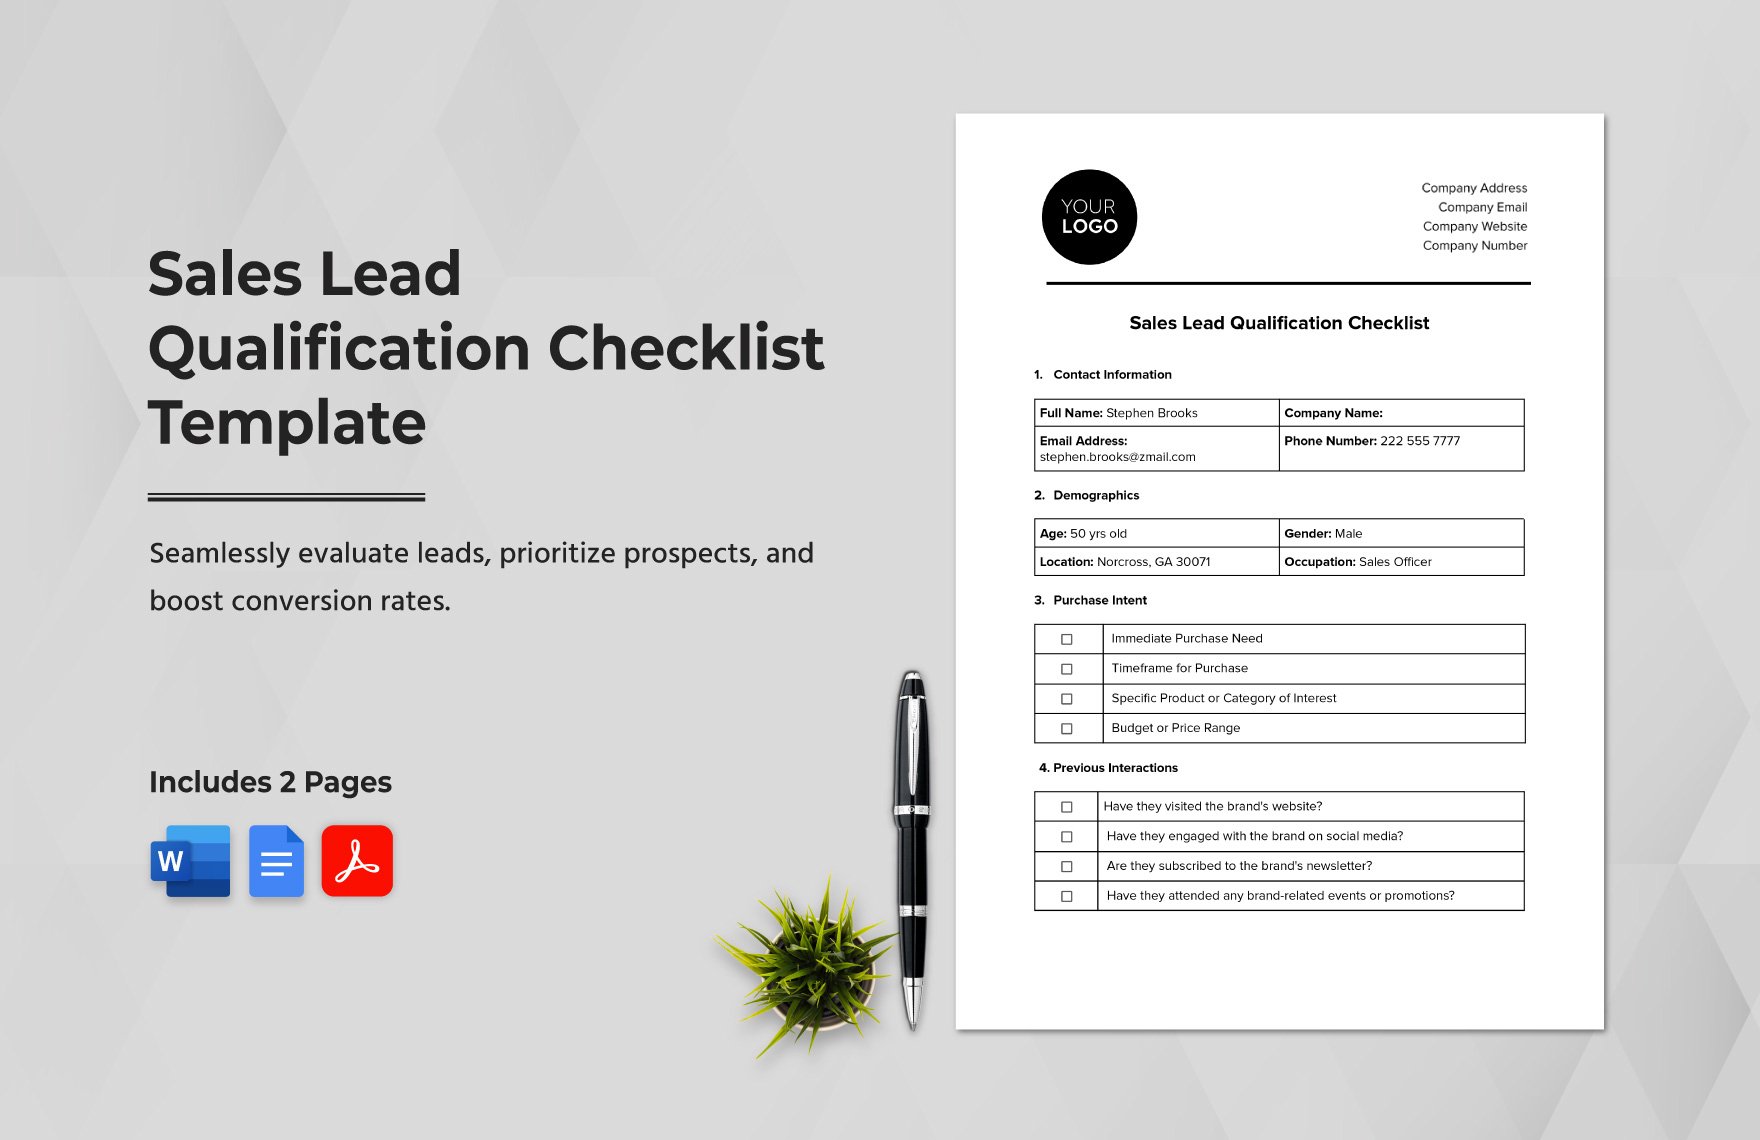 Sales Lead Qualification Checklist Template